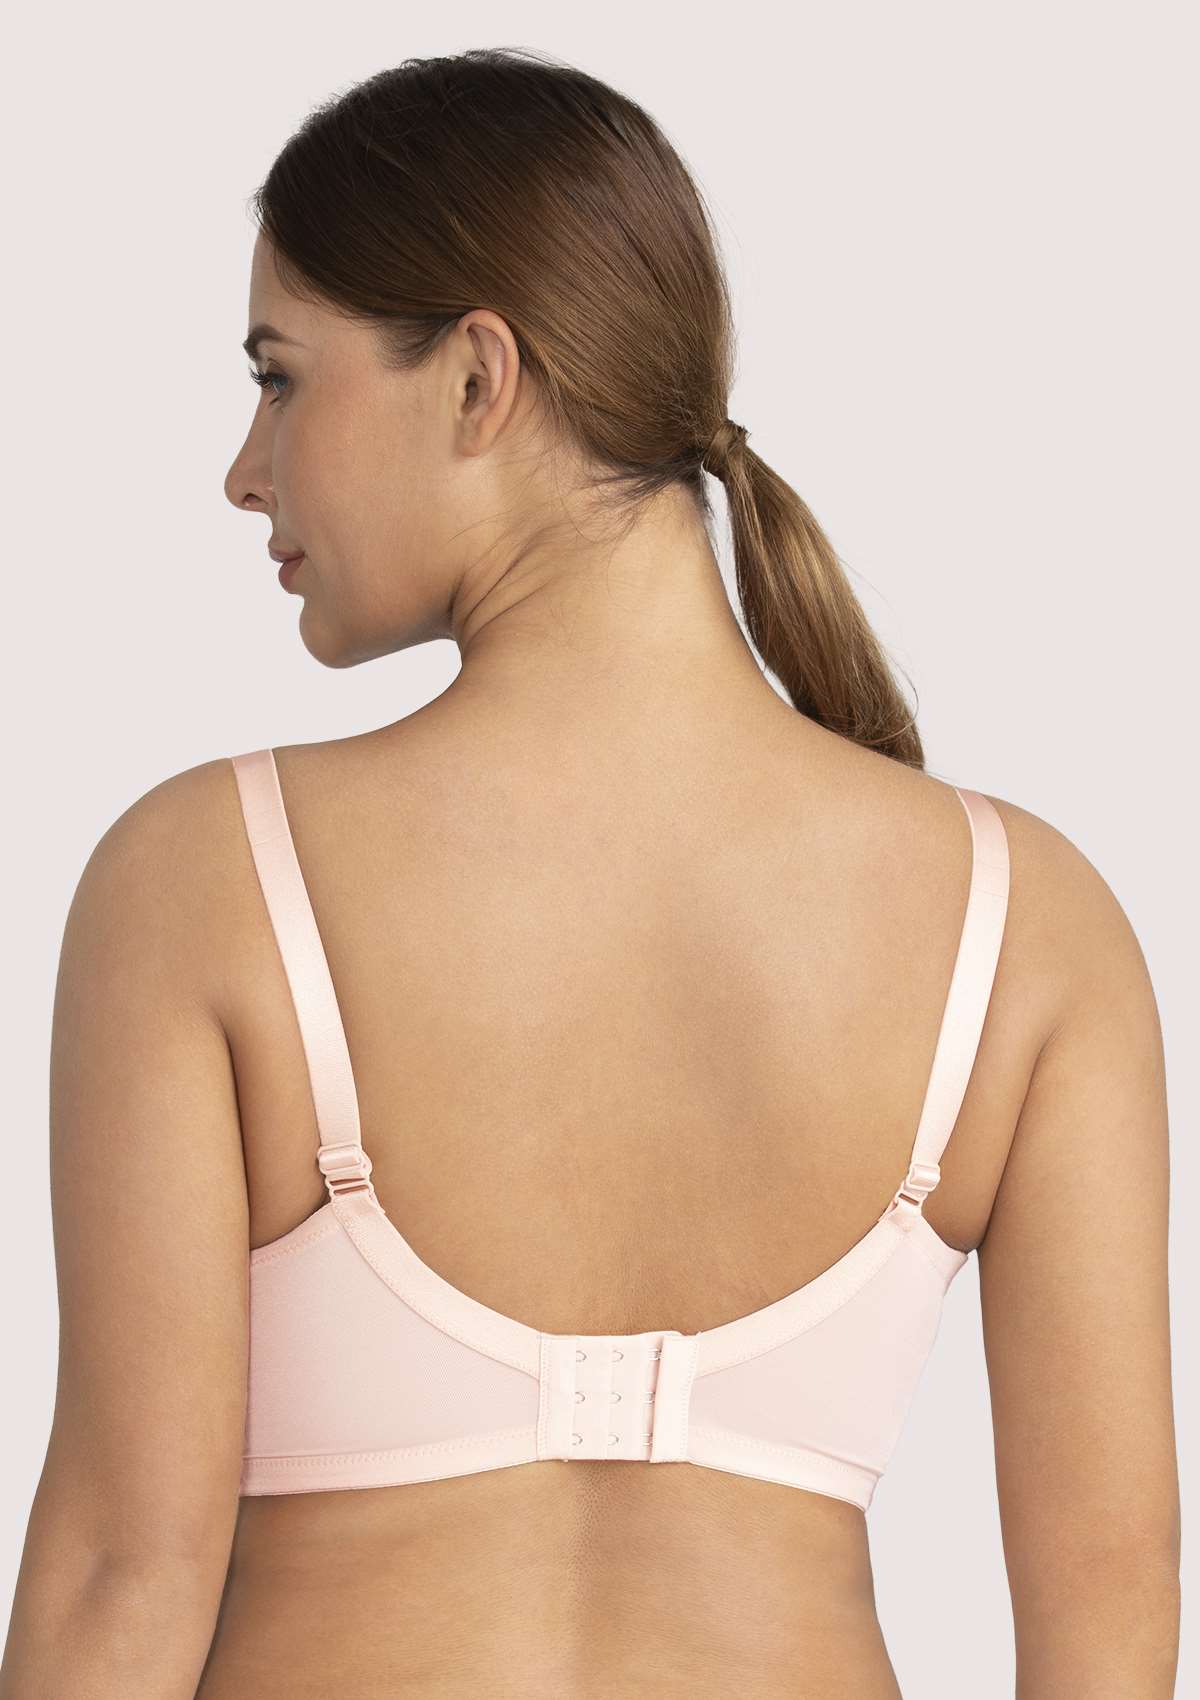 HSIA Sunflower Matching Bra And Panties Set: Comfortable Plus Size Bra - Pink / 34 / DD/E